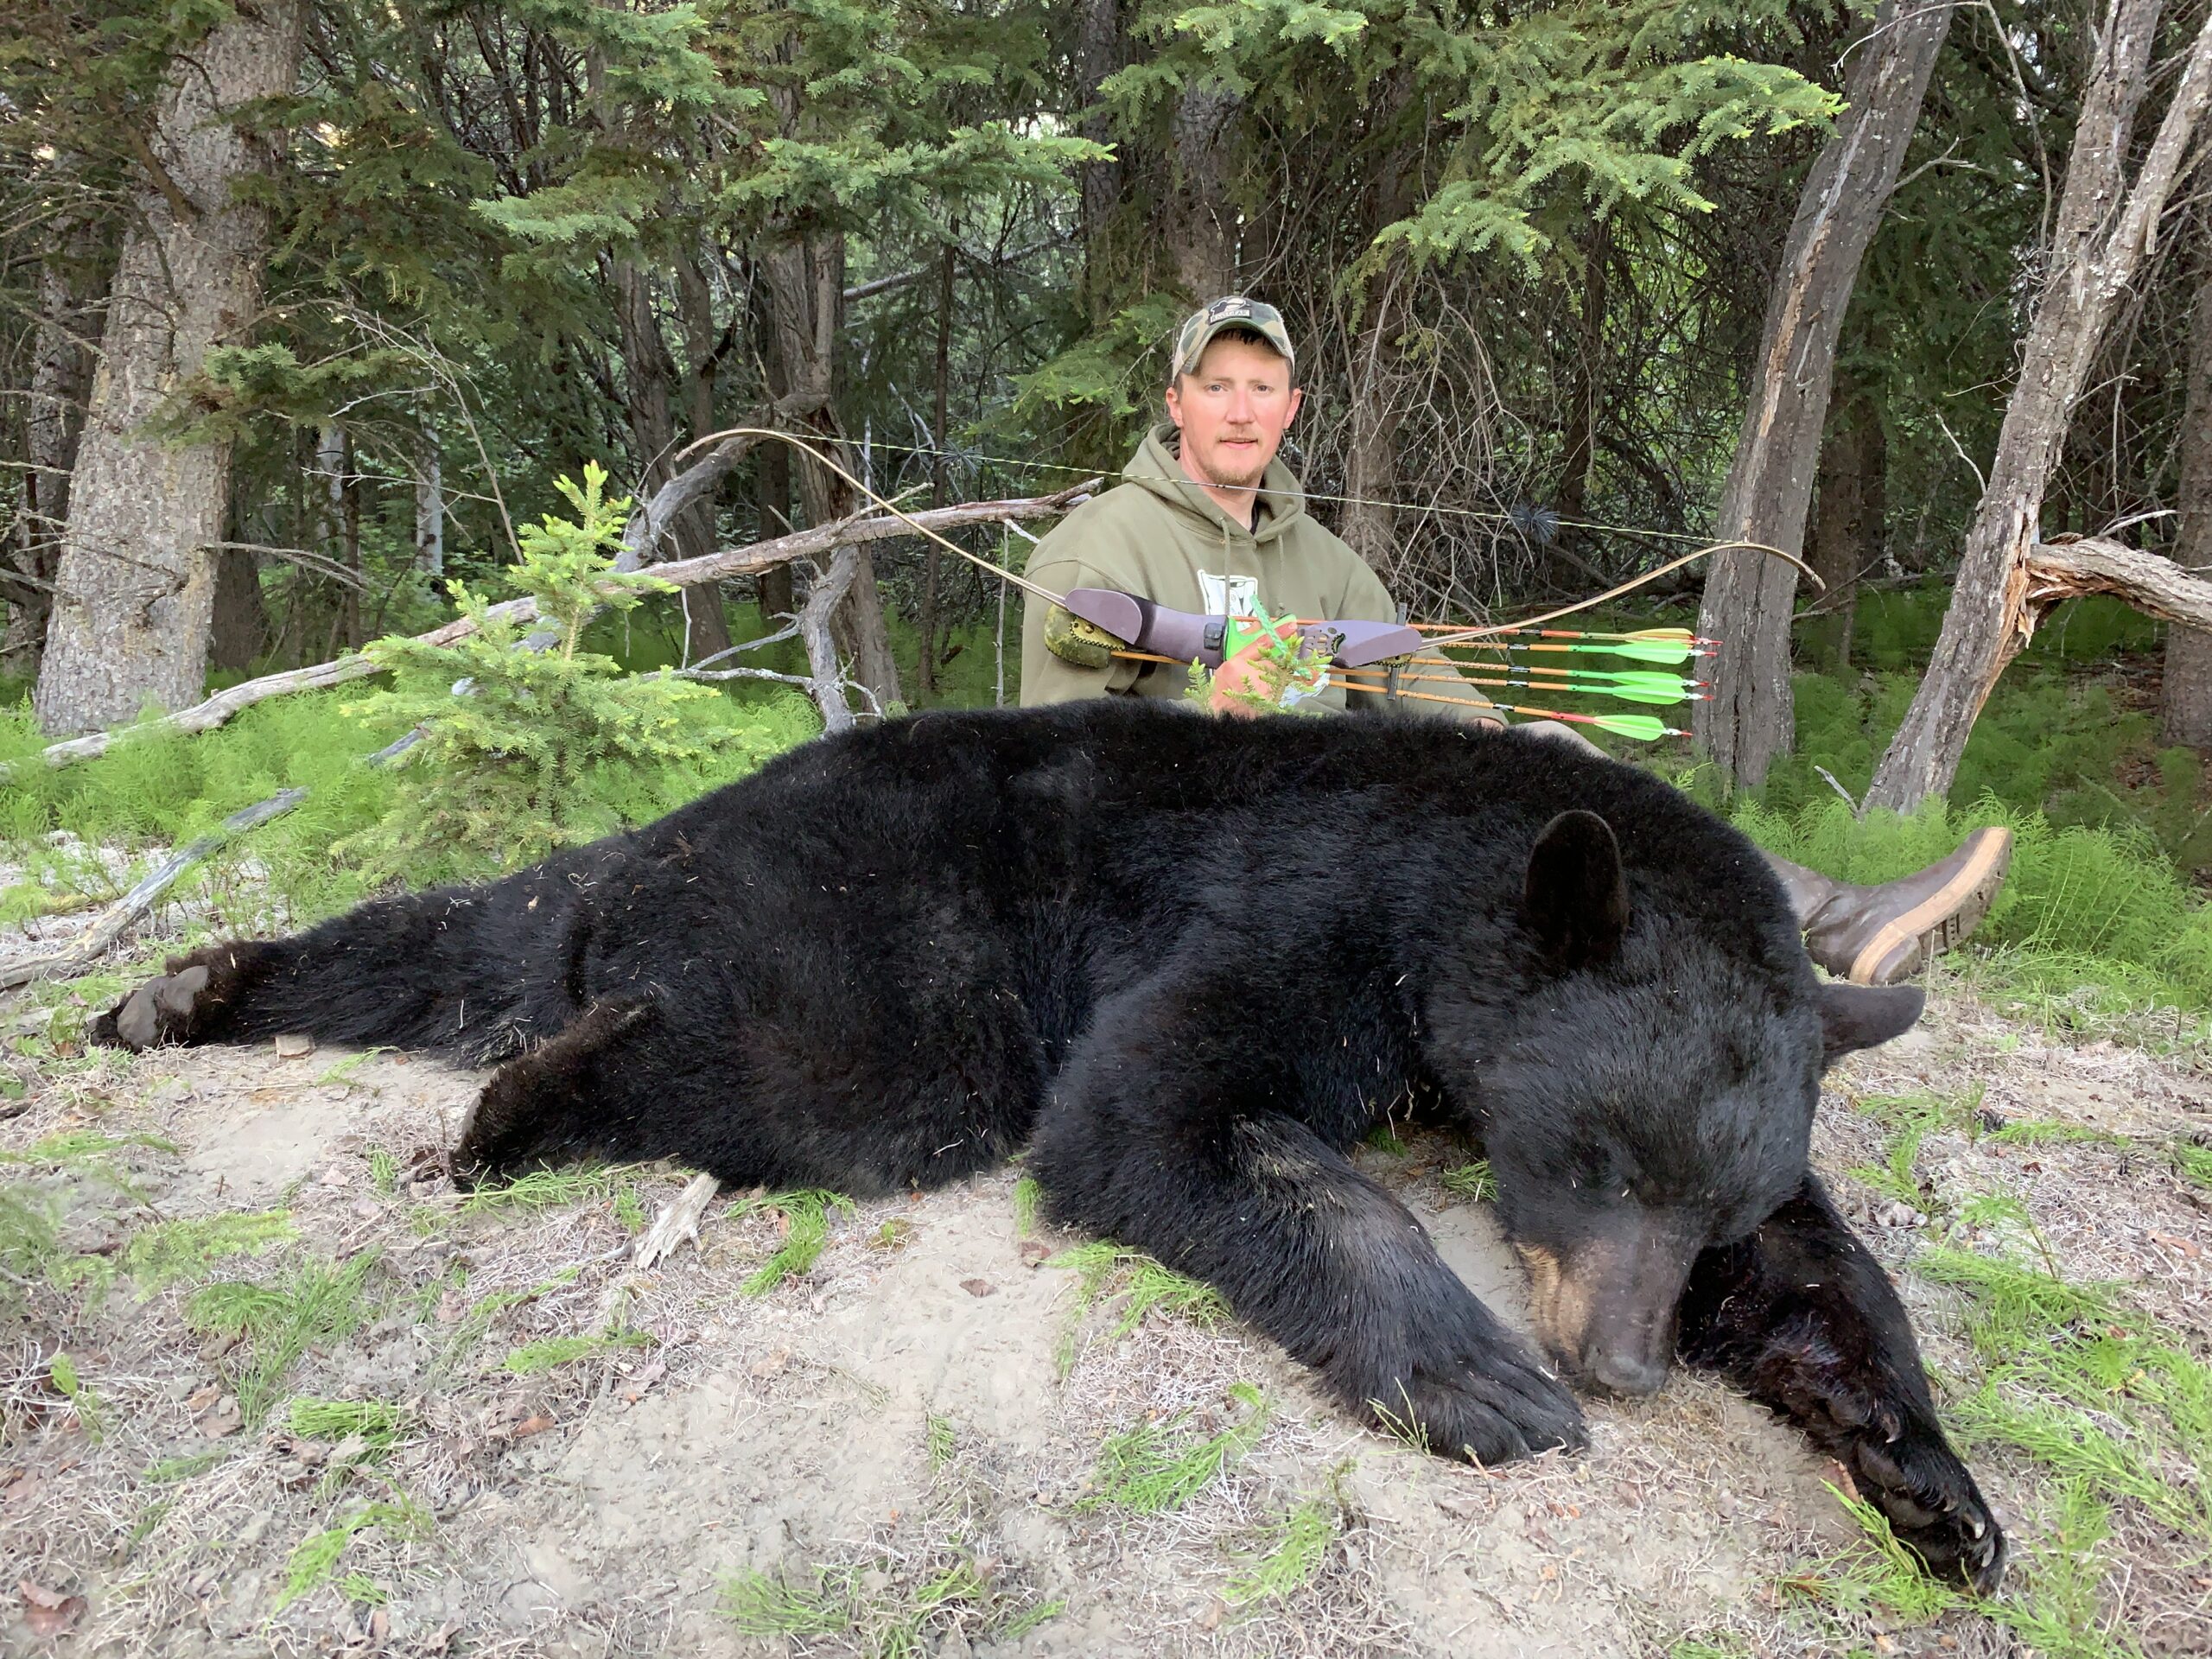 https://www.outdoorlife.com/wp-content/uploads/2023/04/14/archery-black-bear-scaled.jpg